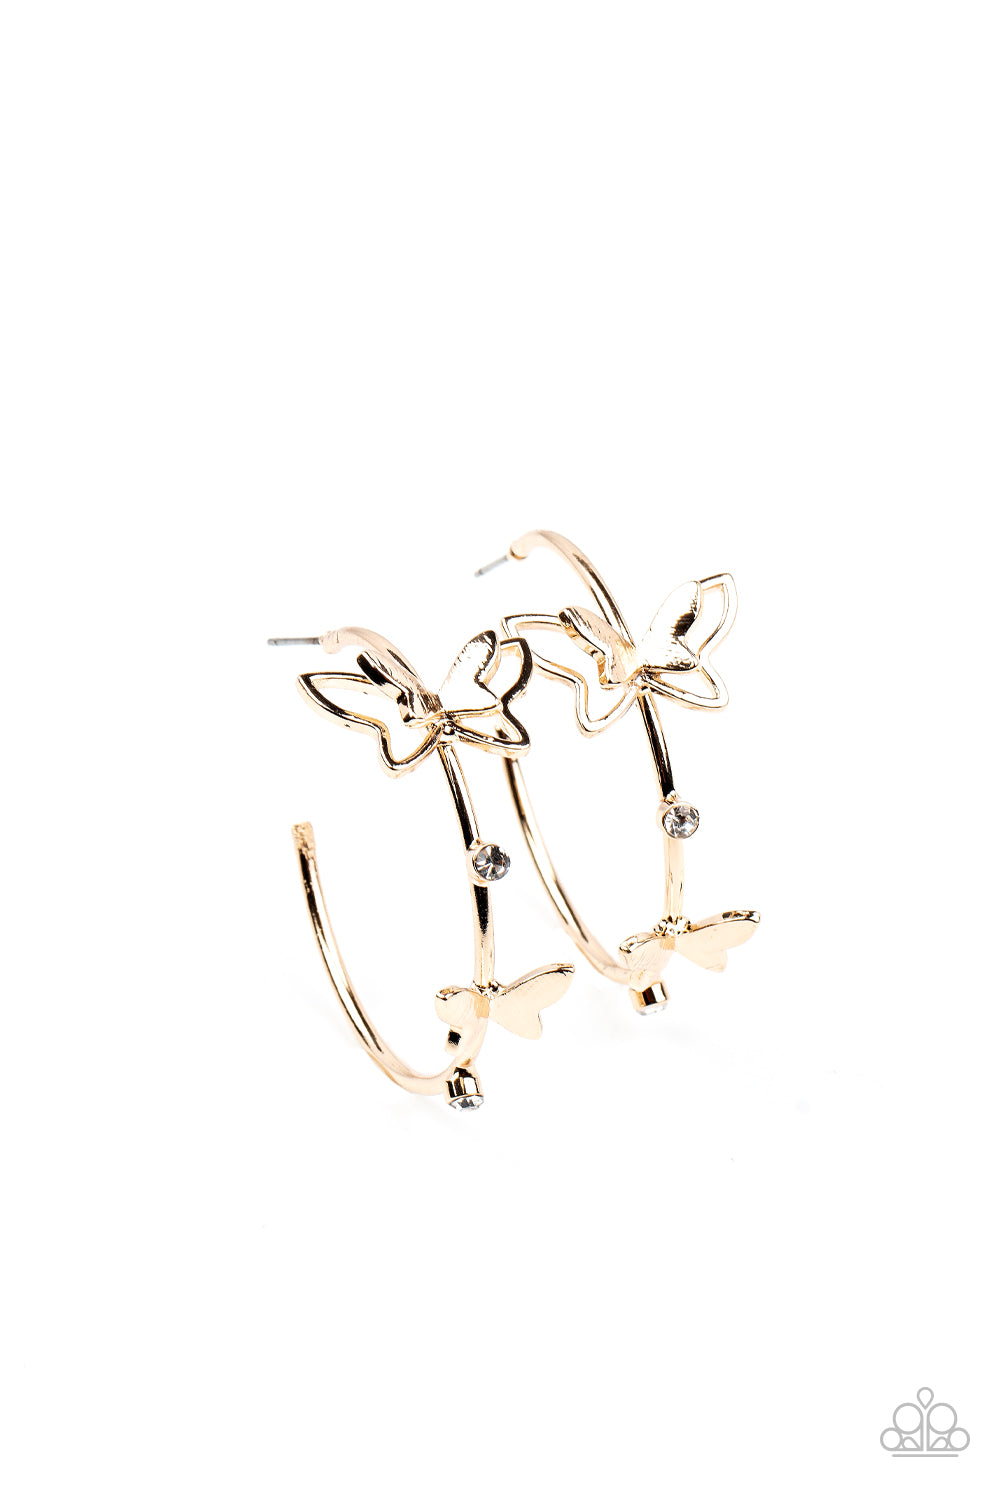 Full Out Flutter - Gold Hoop Earrings - Princess Glam Shop